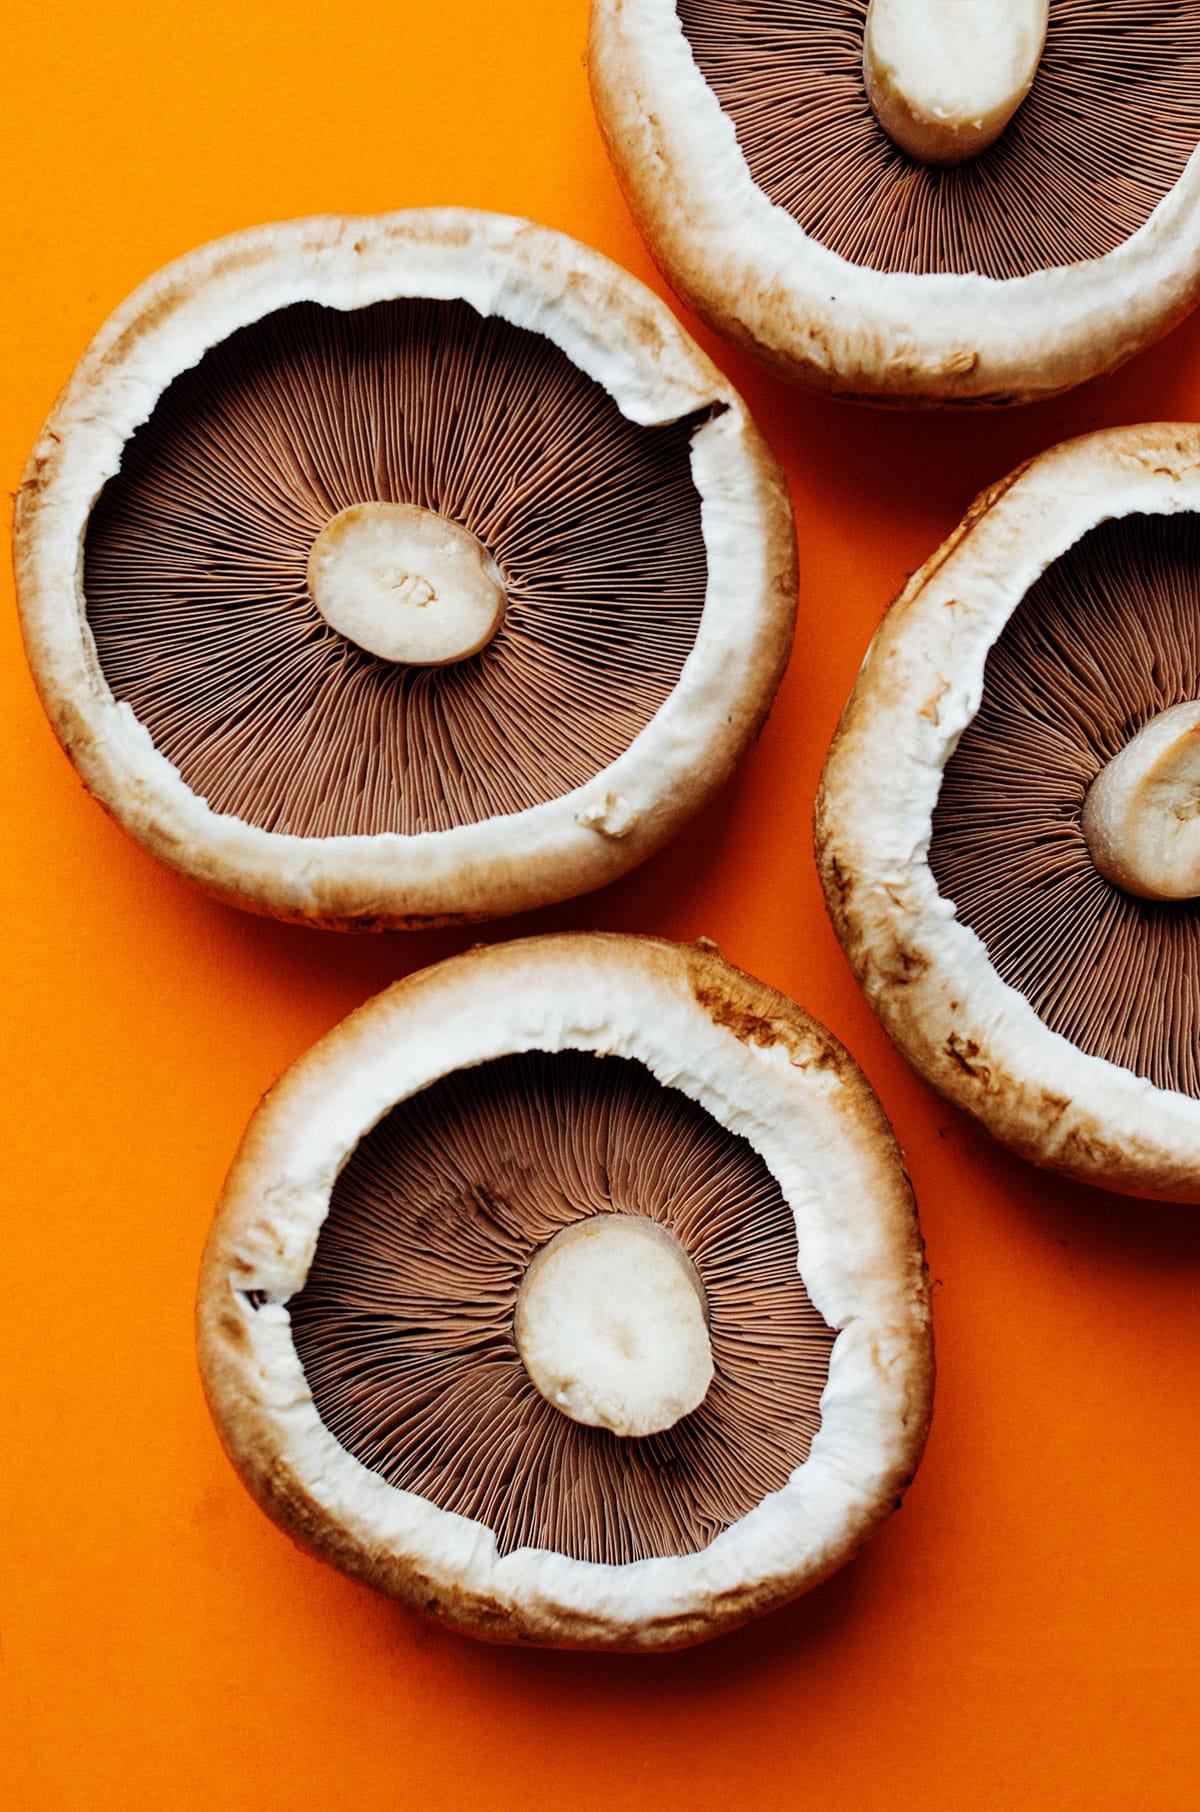 Portobello mushrooms on an orange background.